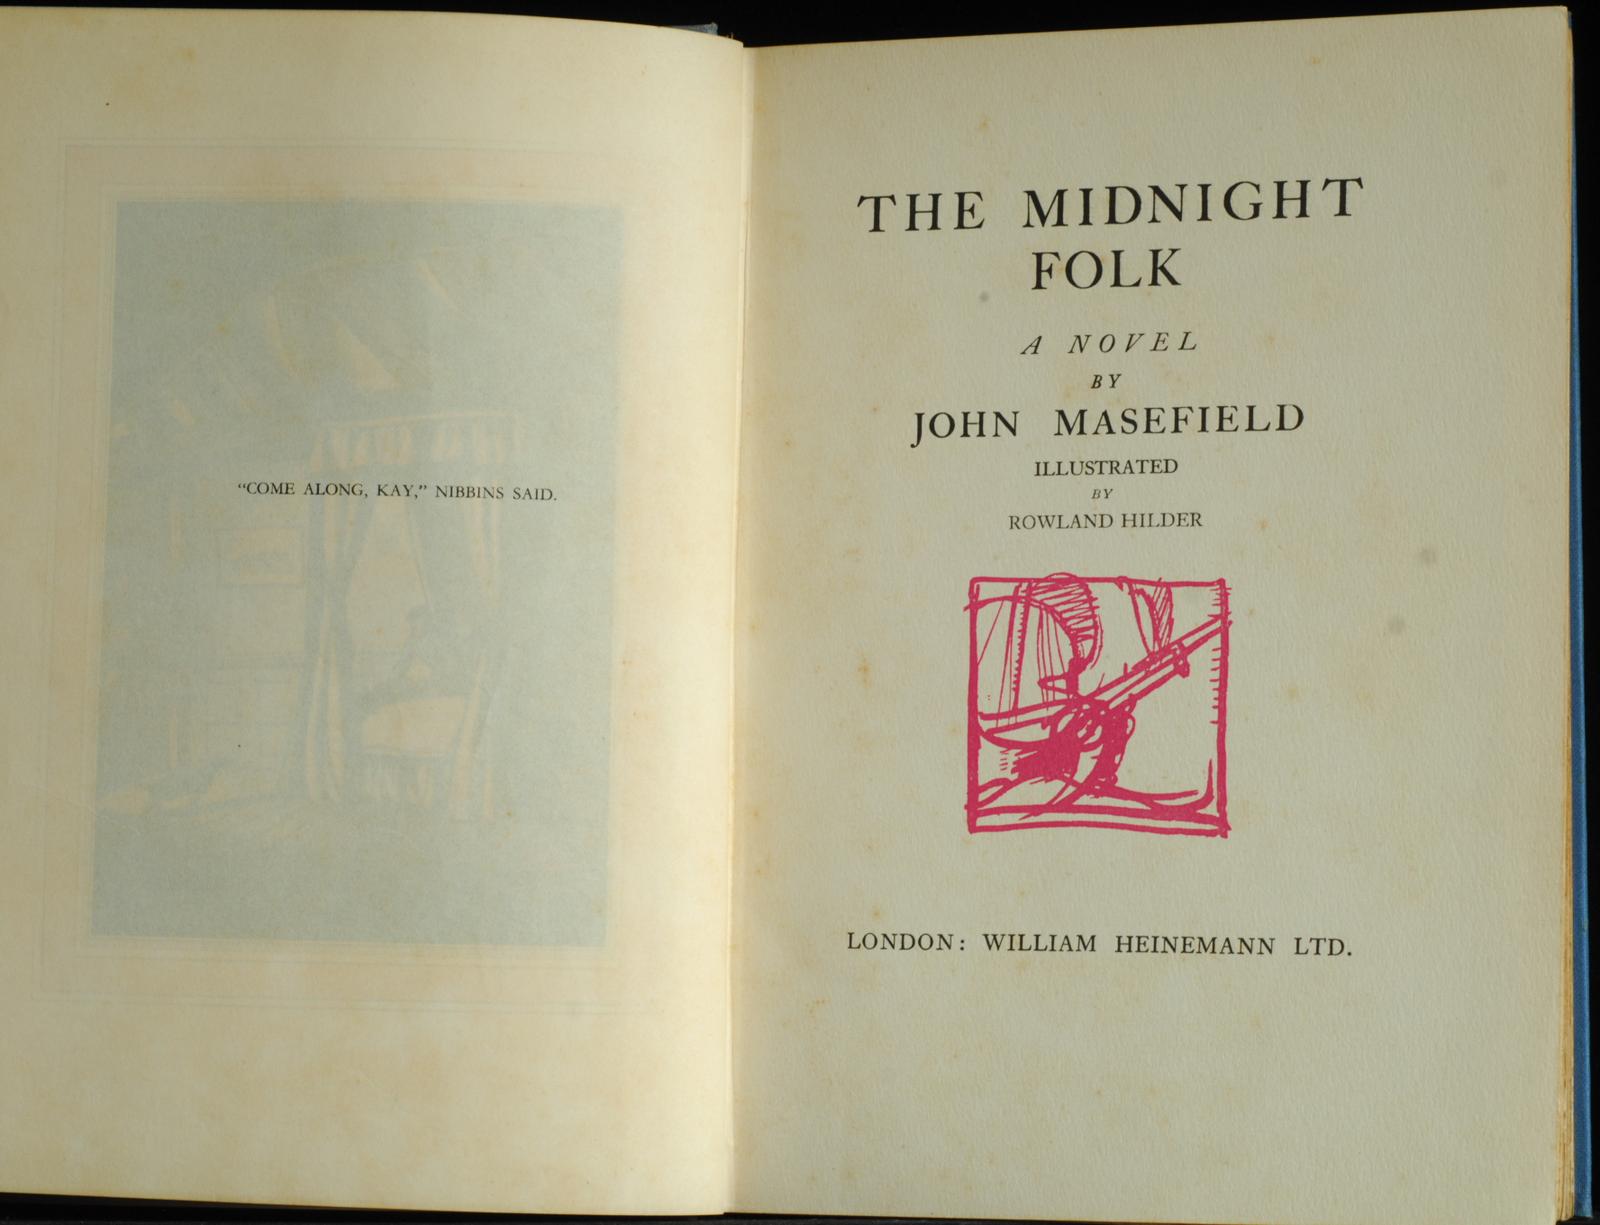 mbb005041b_-_Masefield_John_-_The_Midnight_Folk_-_ROWLAND_HILDER.jpg